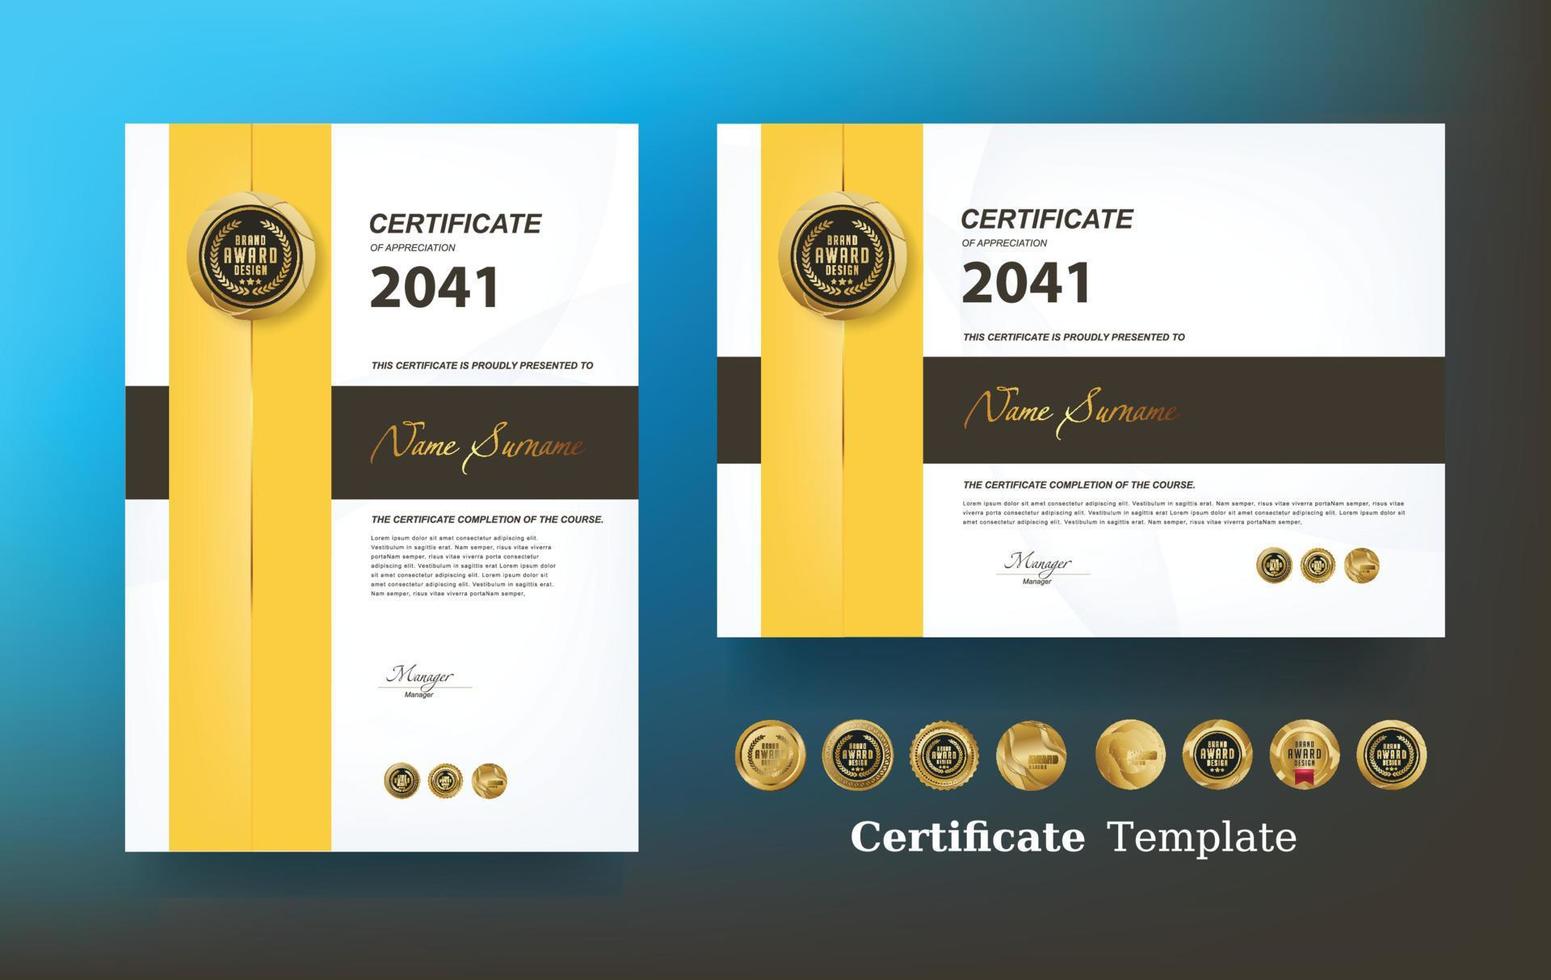 Certificate of appreciation template and vector golden Luxury premium badges